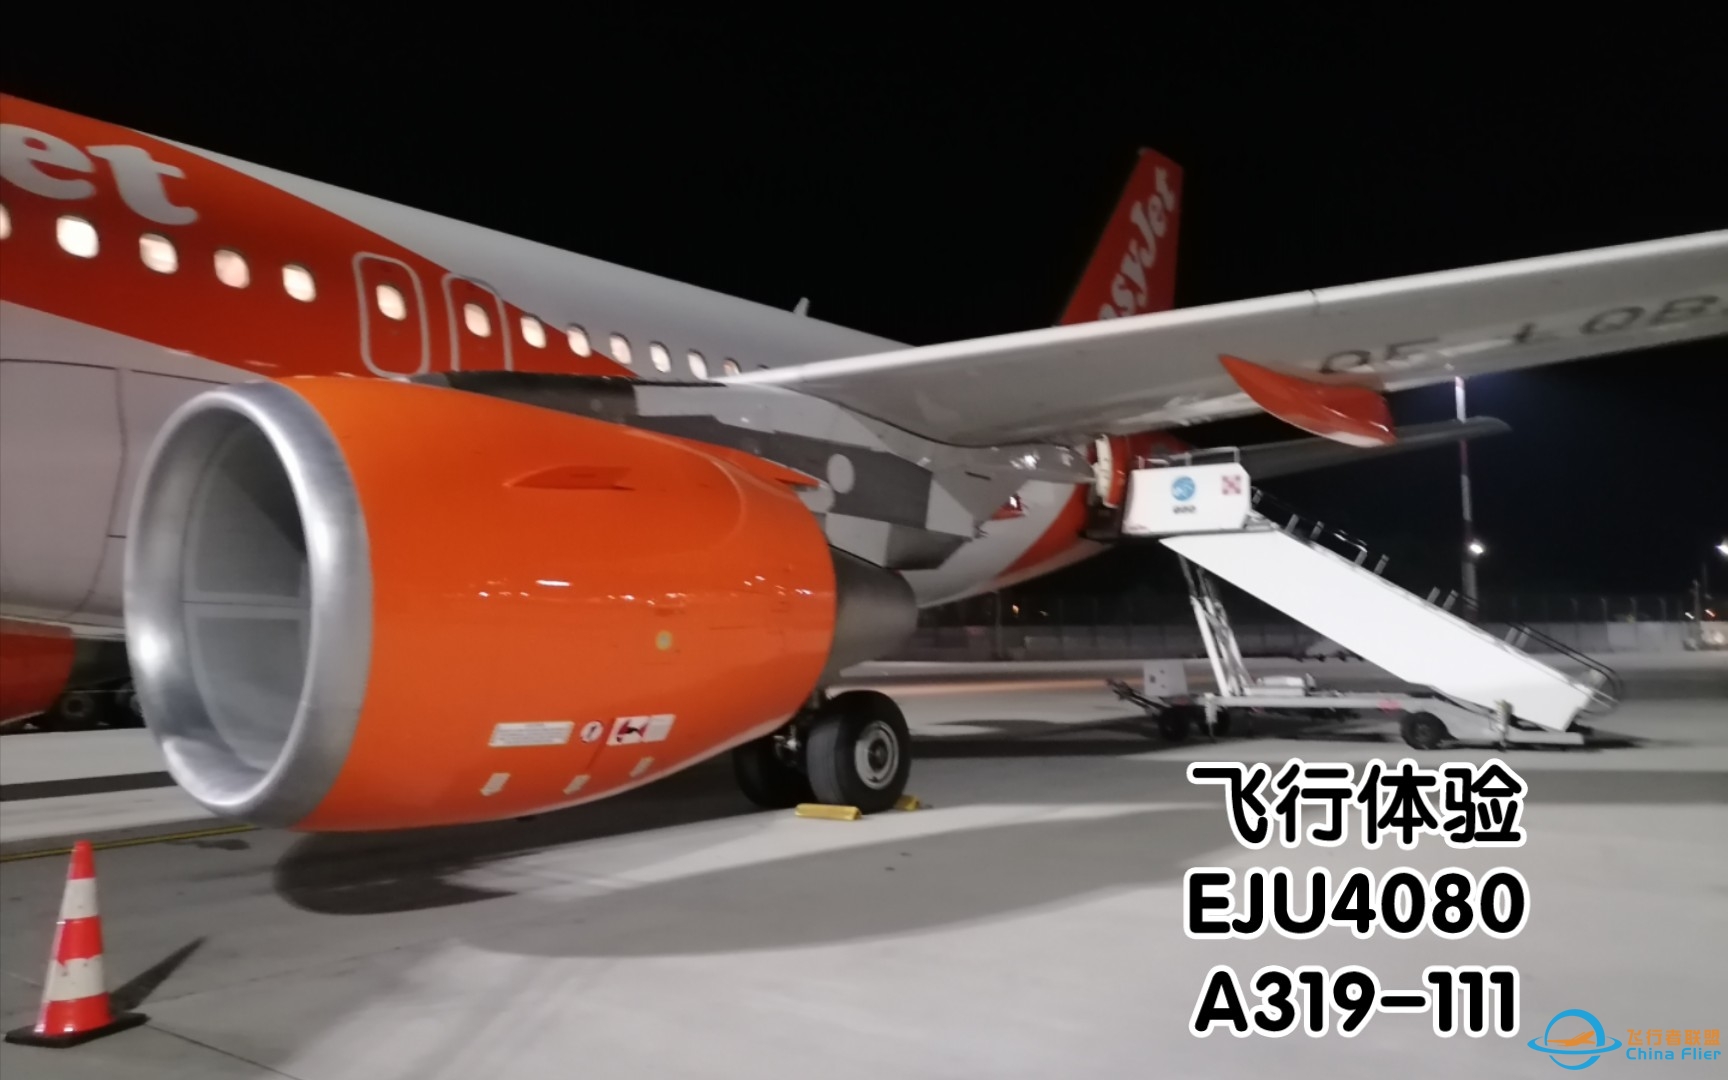 【Flight Vlog】飞友首次进入驾驶舱！易捷航空A319飞行体验-6798 